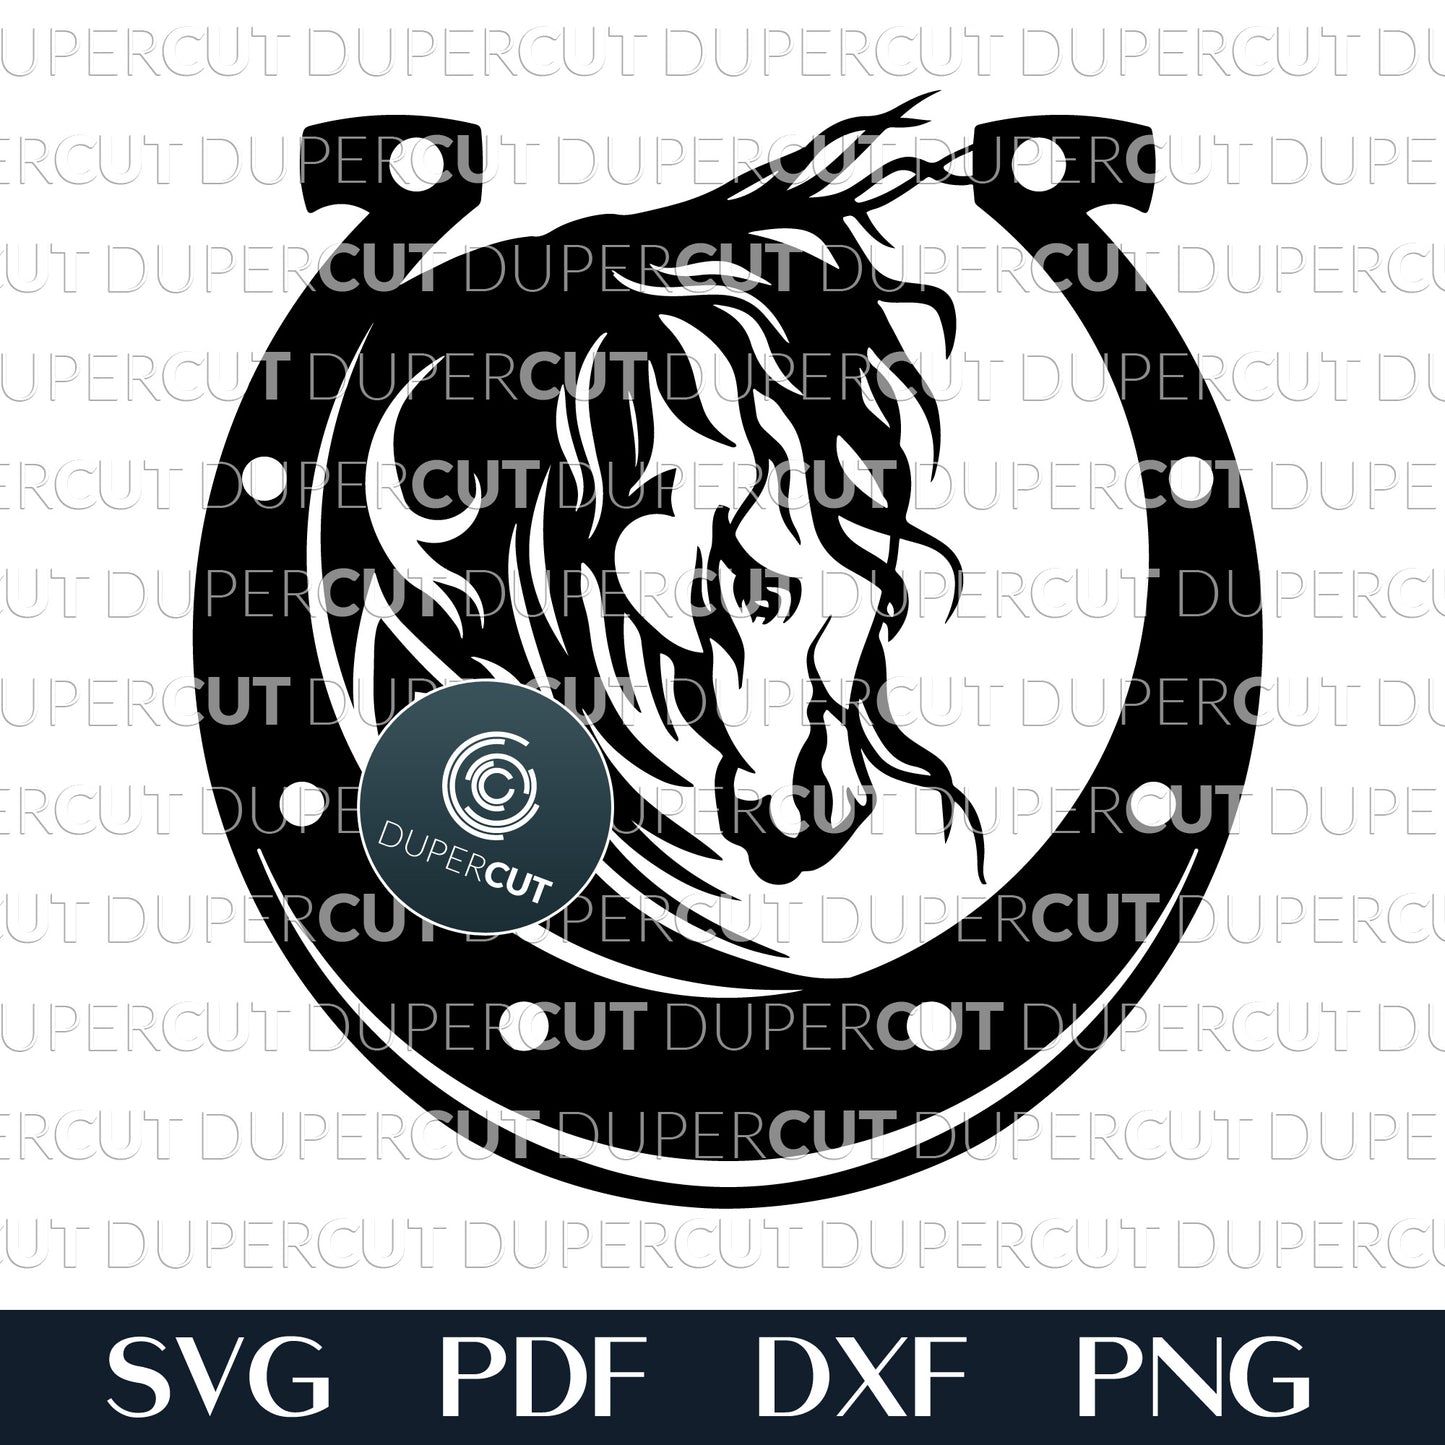 Horse head horseshoe - SVG PDF DXF laser cutting files for Glowforge, Cricut, Silhouette Cameo, CNC plasma machines by DuperCut